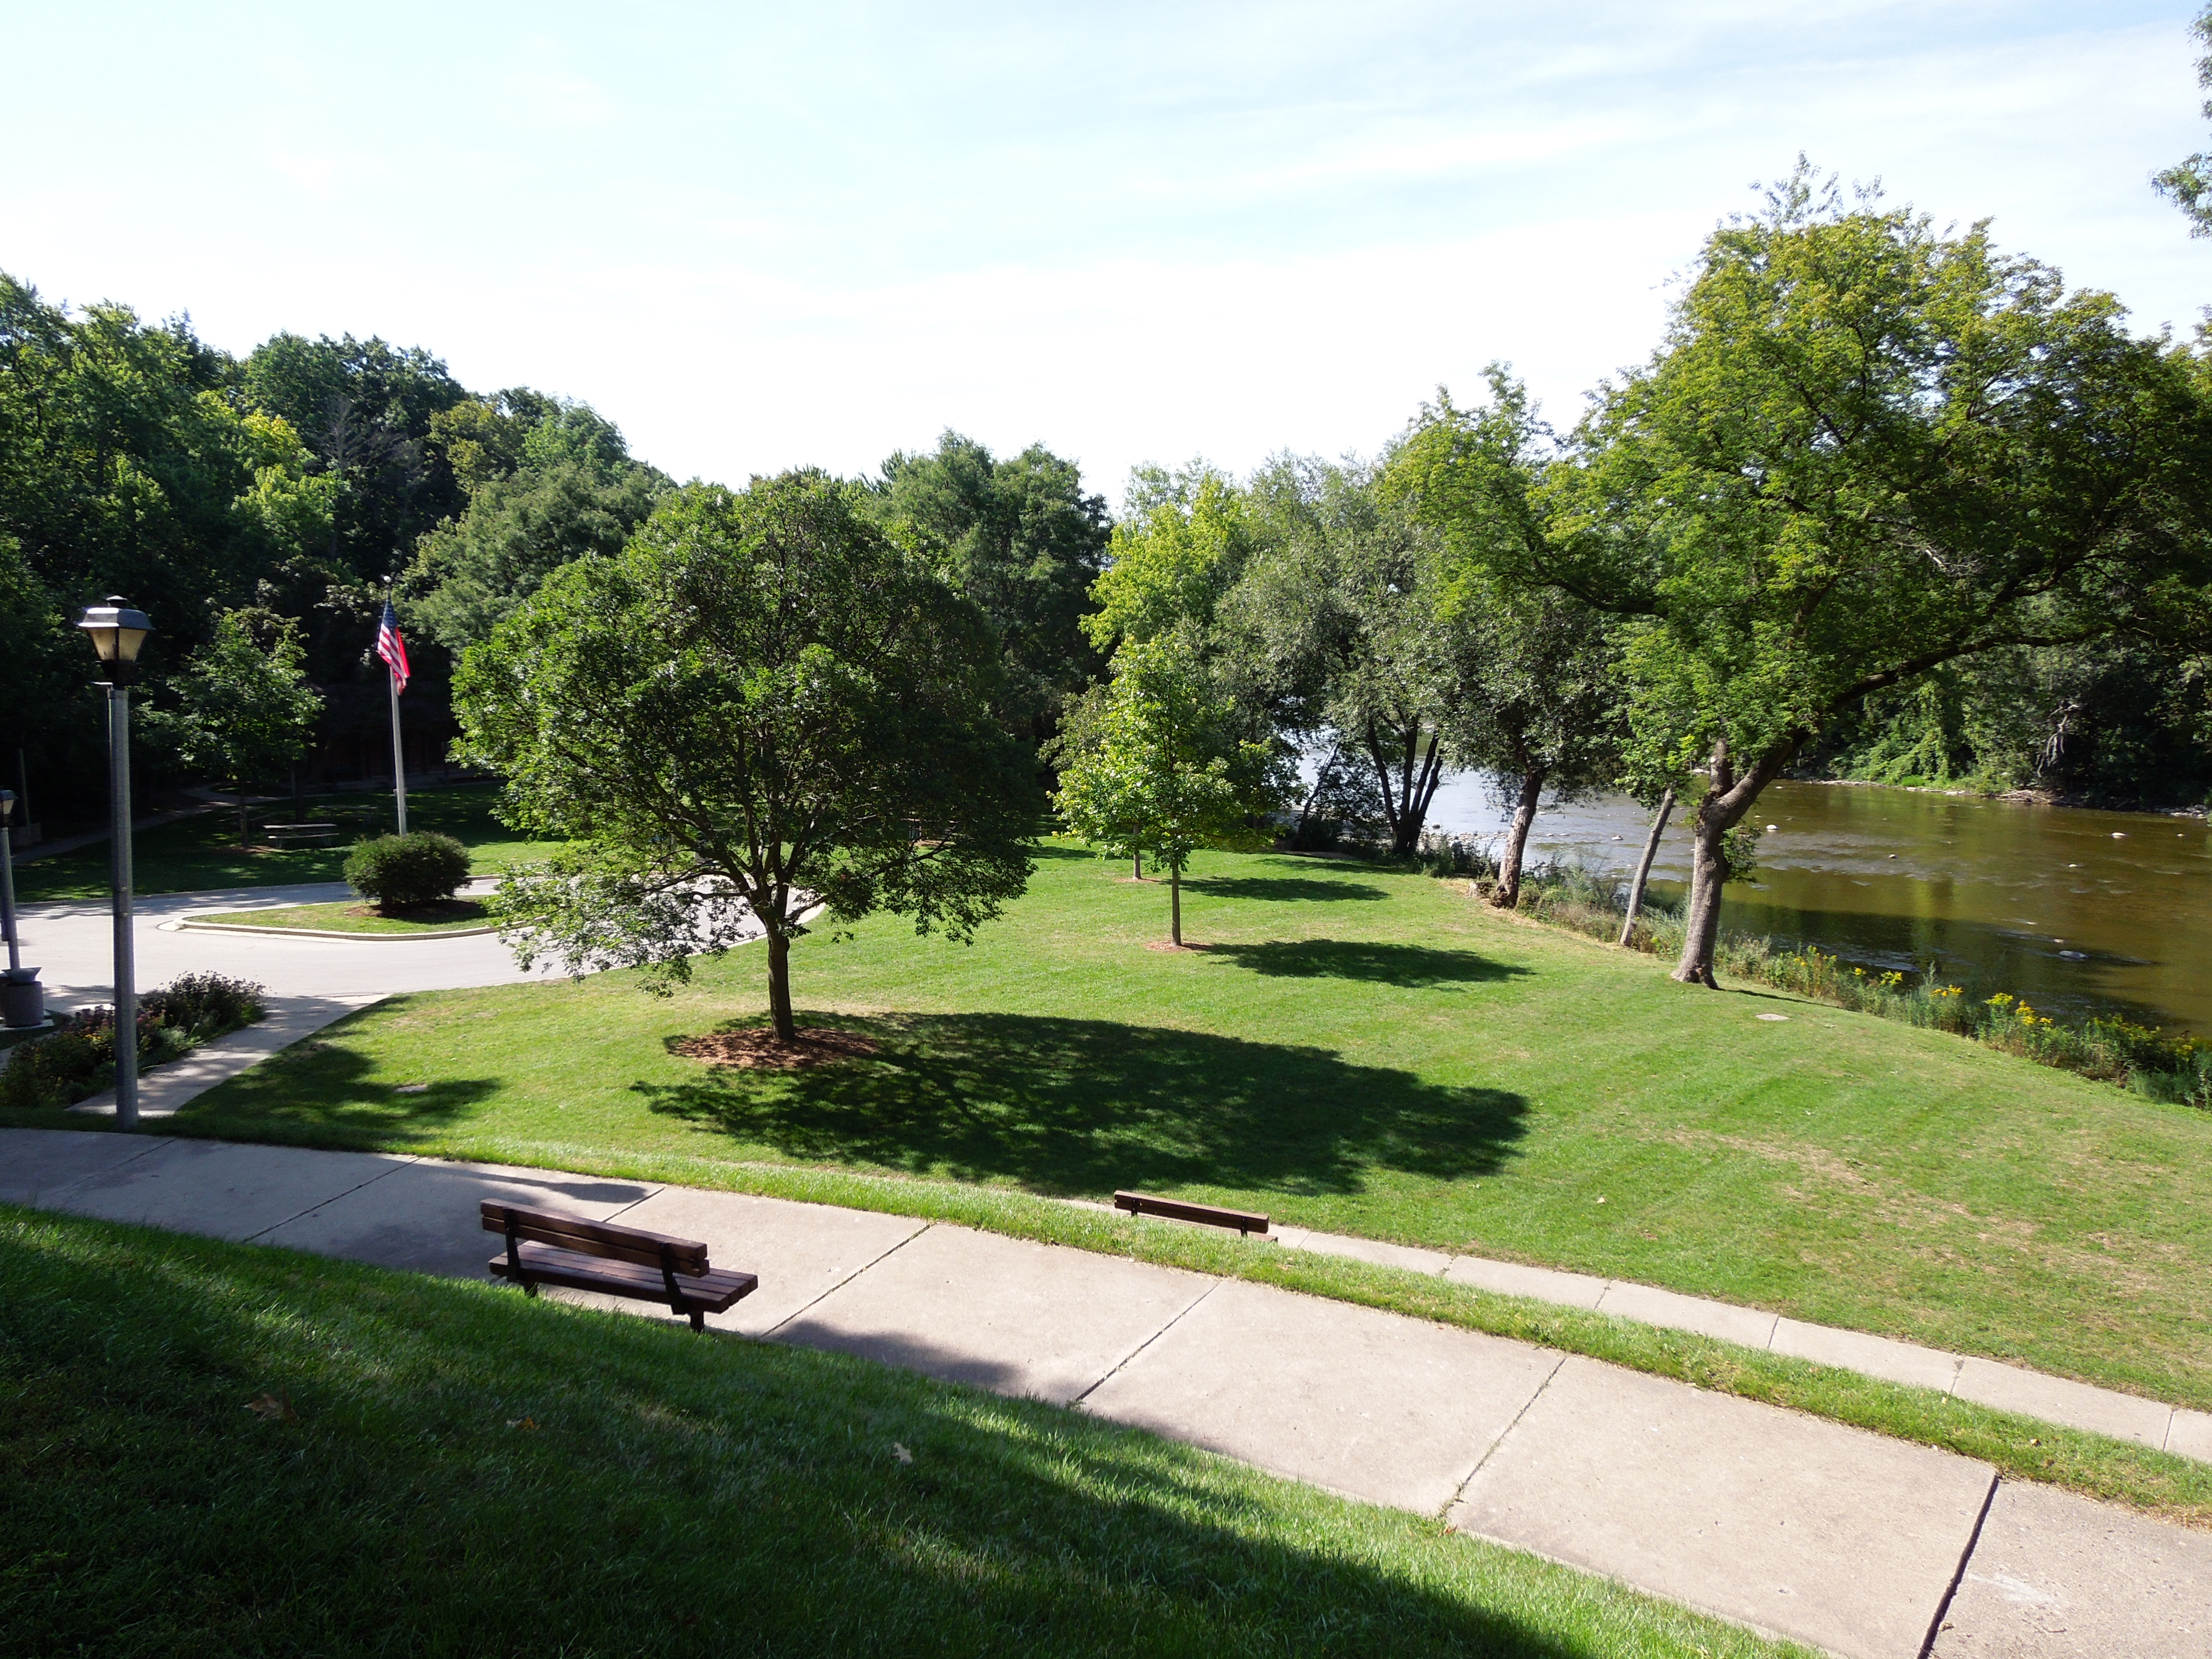 File:Hubbard Park view 1.JPG - Wikimedia Commons